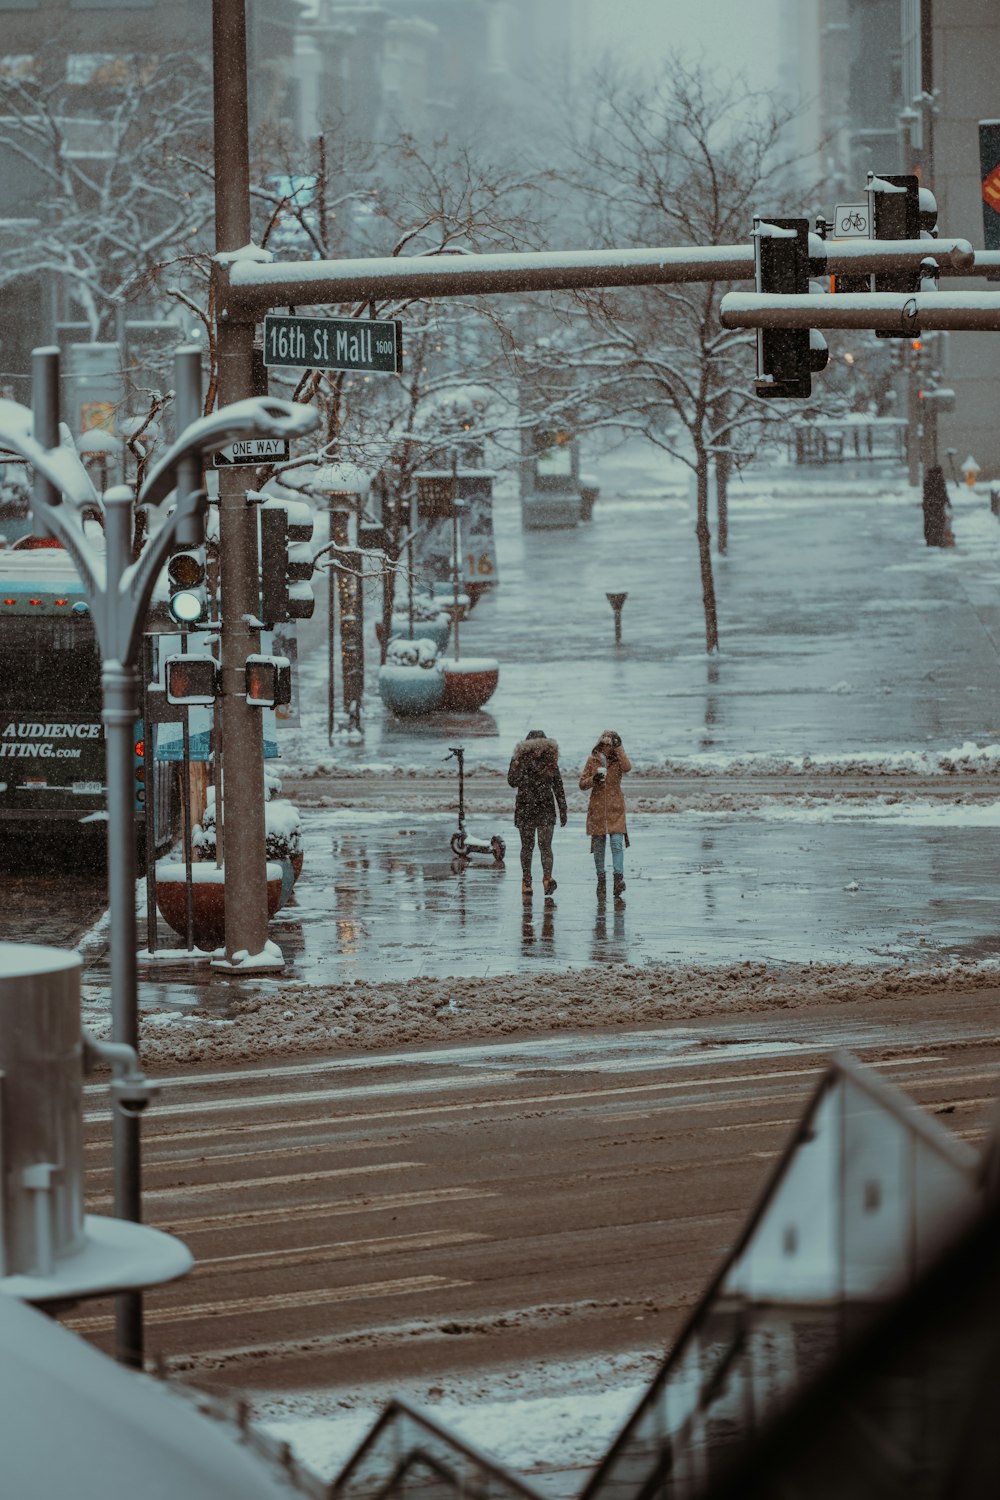 a couple of people walking across a street in the rain